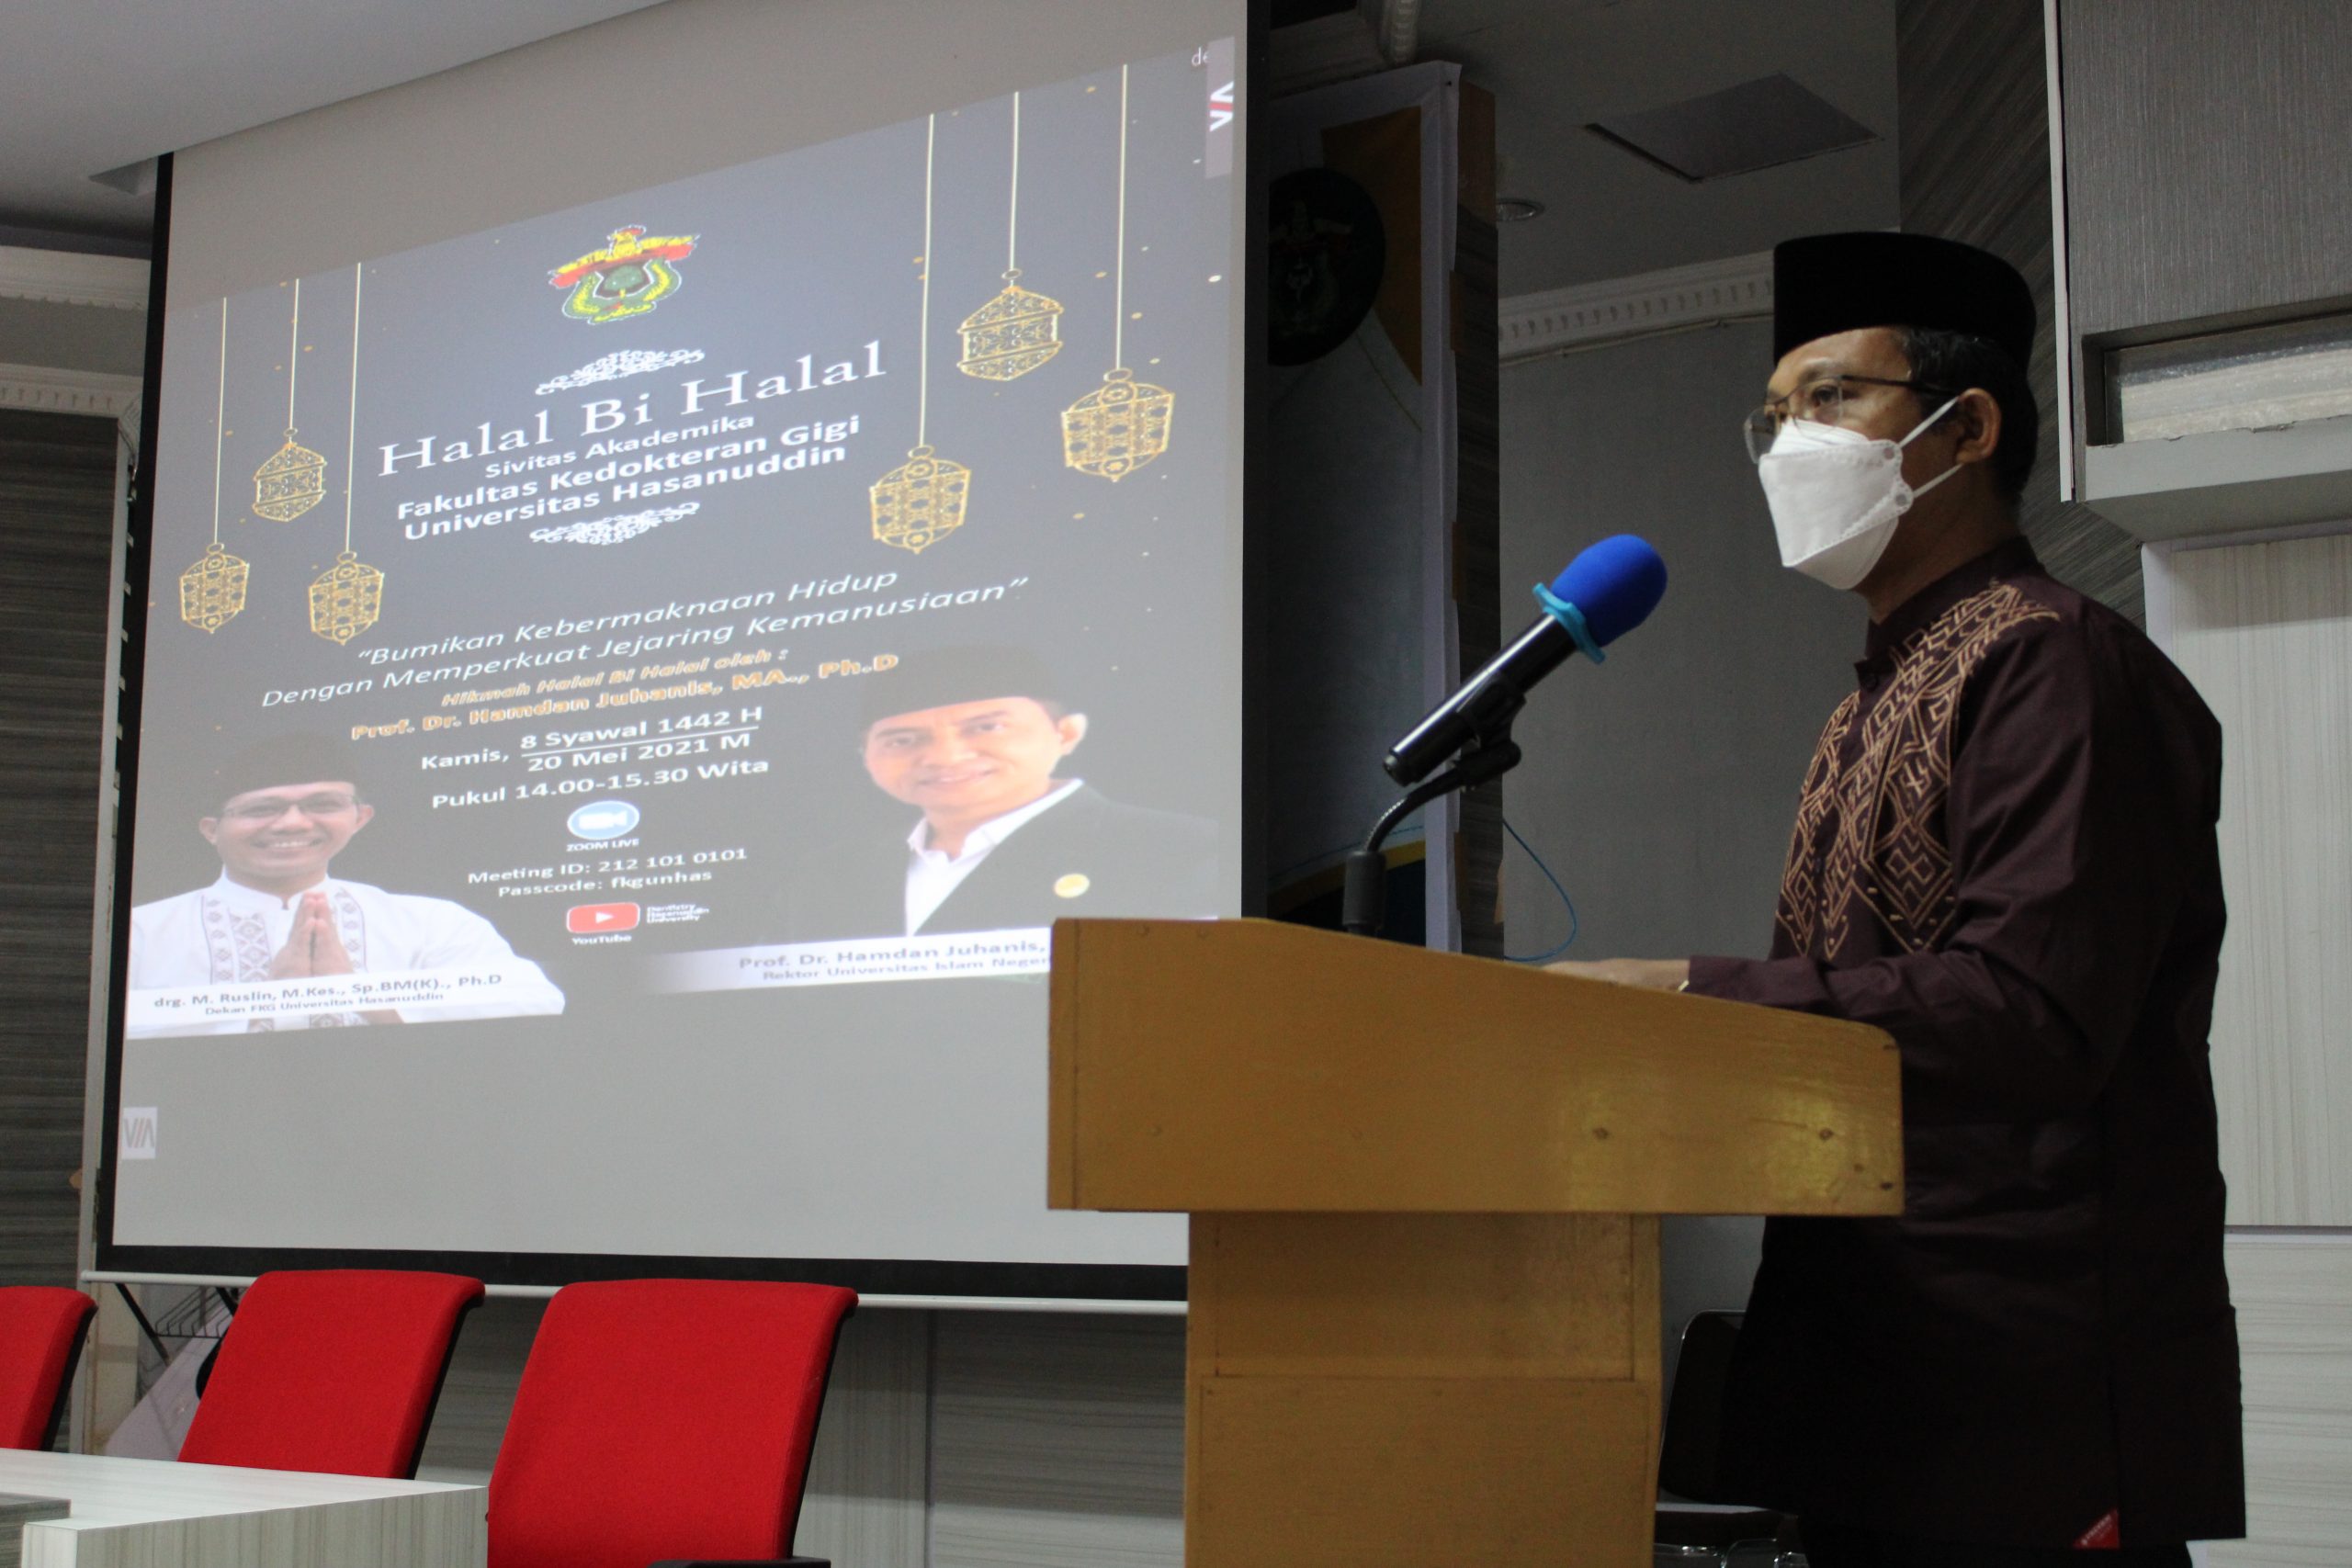 Gelar Halal Bihalal, FKG Unhas Hadirkan Rektor UIN Makassar Sebagai Narasumber post thumbnail image